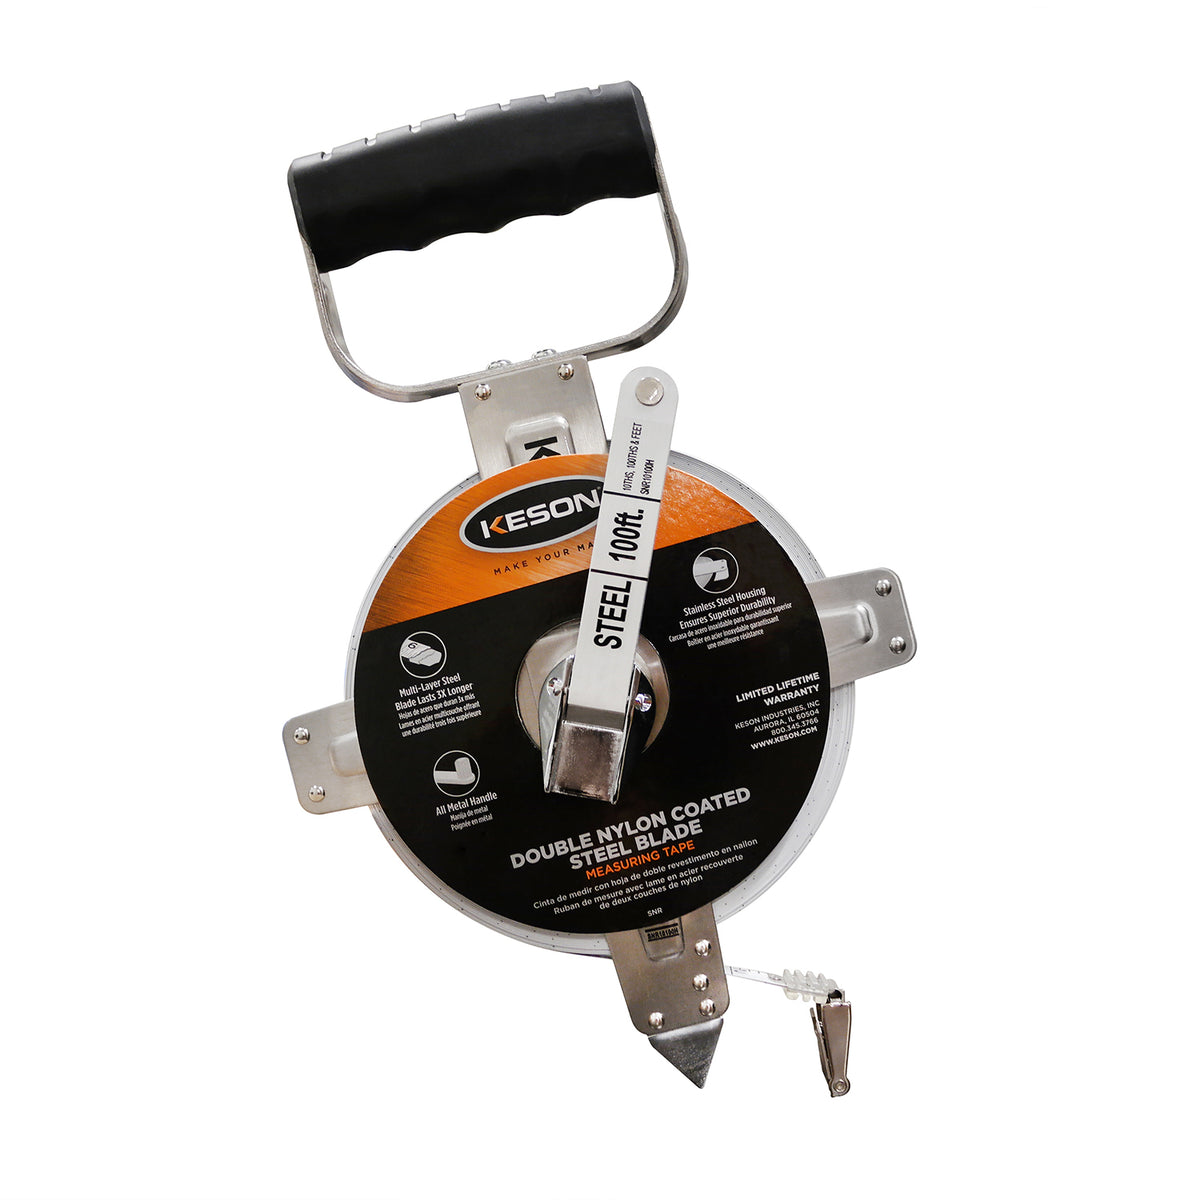 Keson SNR Series Steel Measuring Tape (Ft/10ths/100ths) -Measurement Tools- eGPS Solutions Inc.